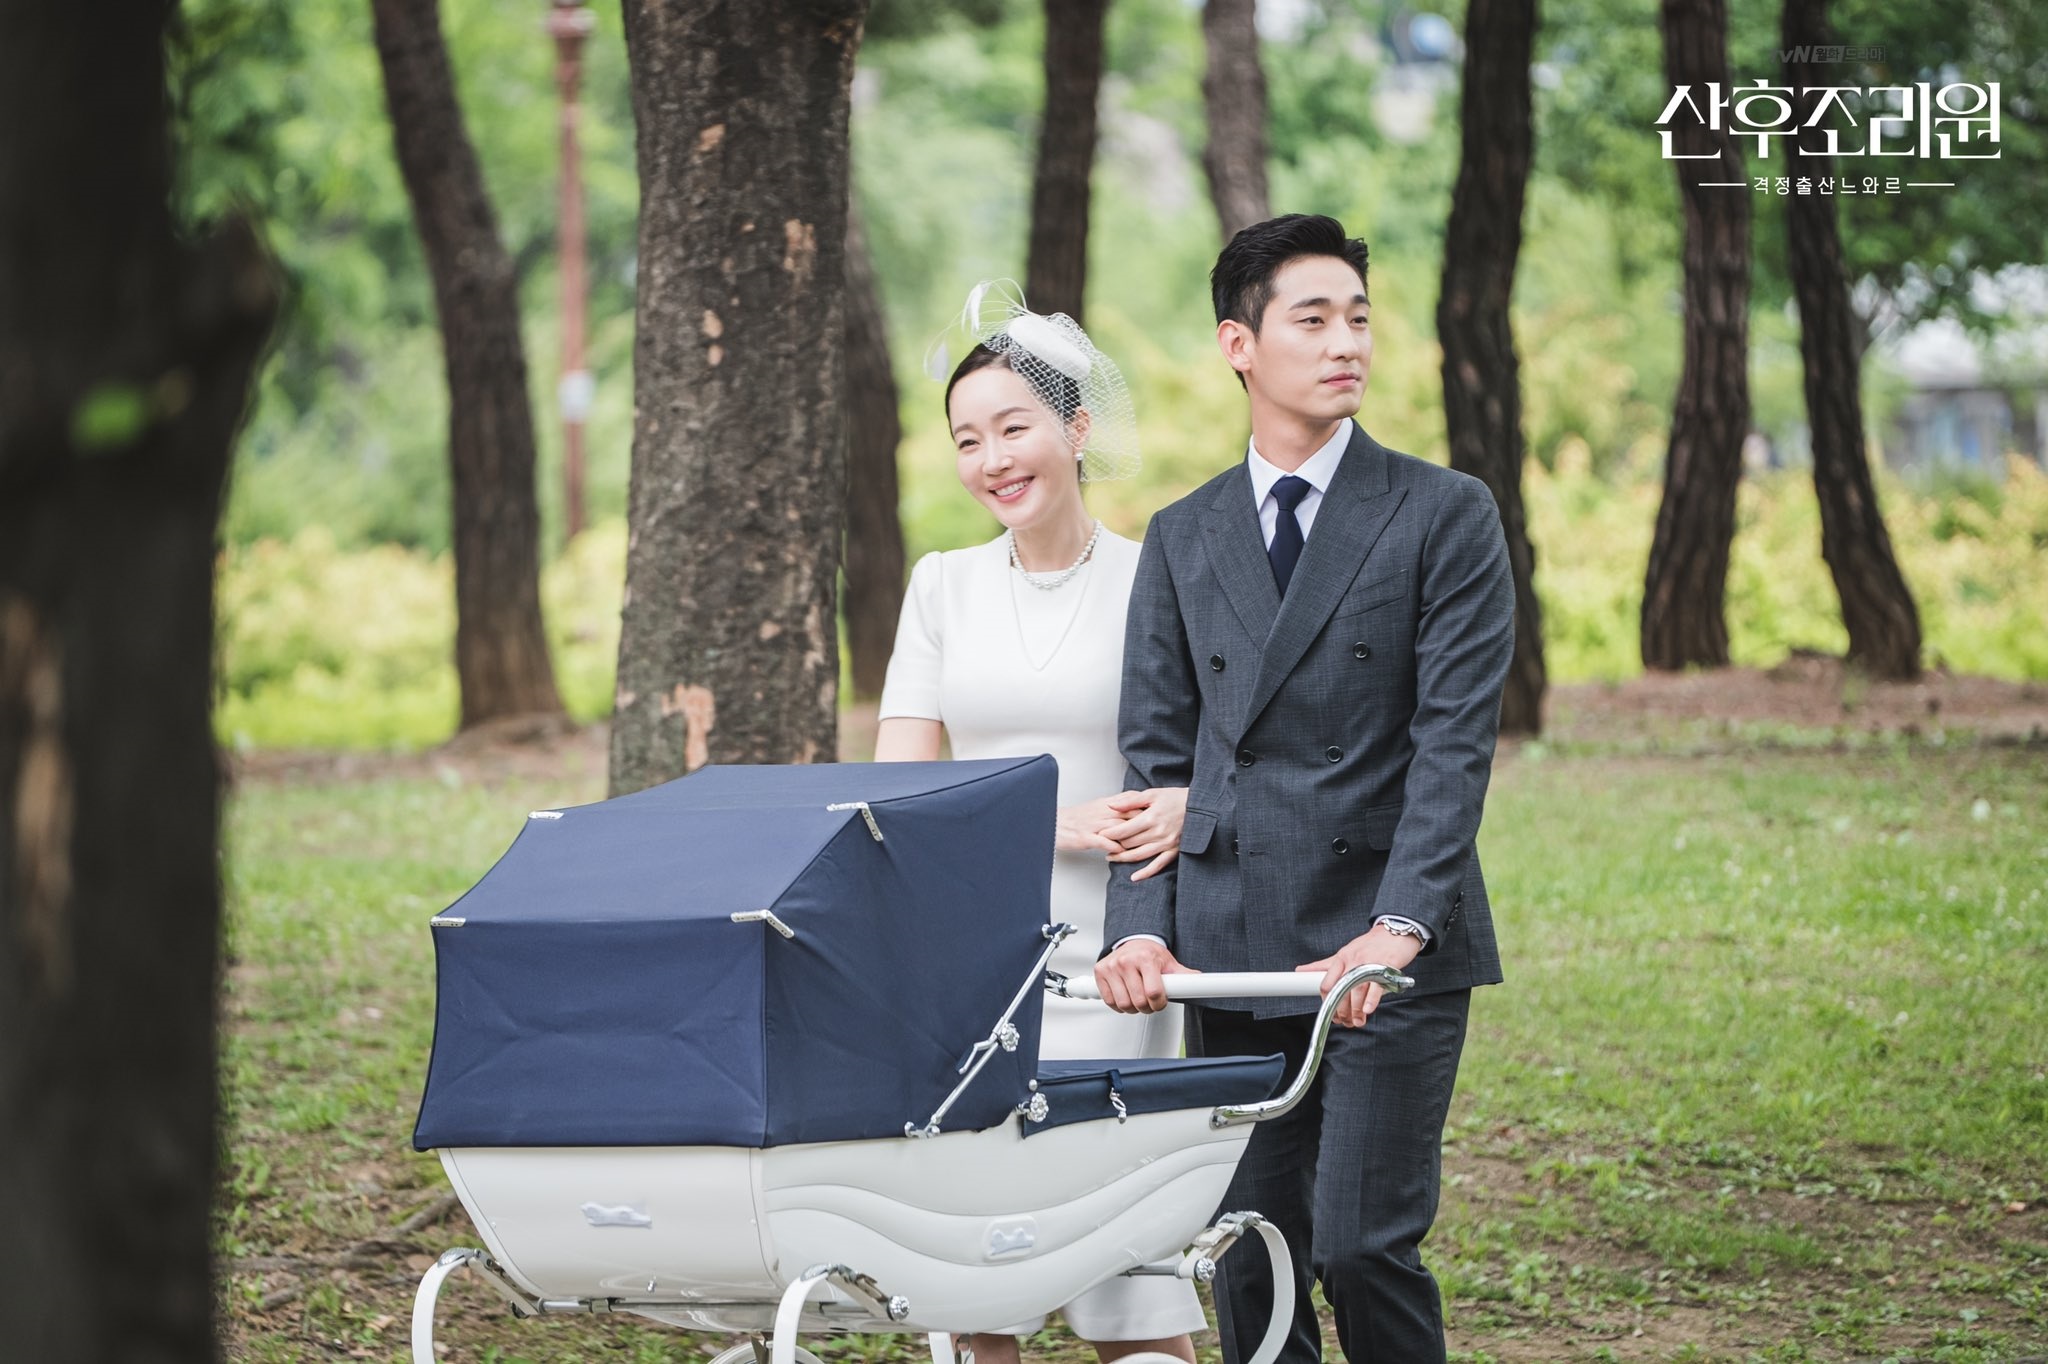 Birthcare Center. (Sumber gambar: tvN)